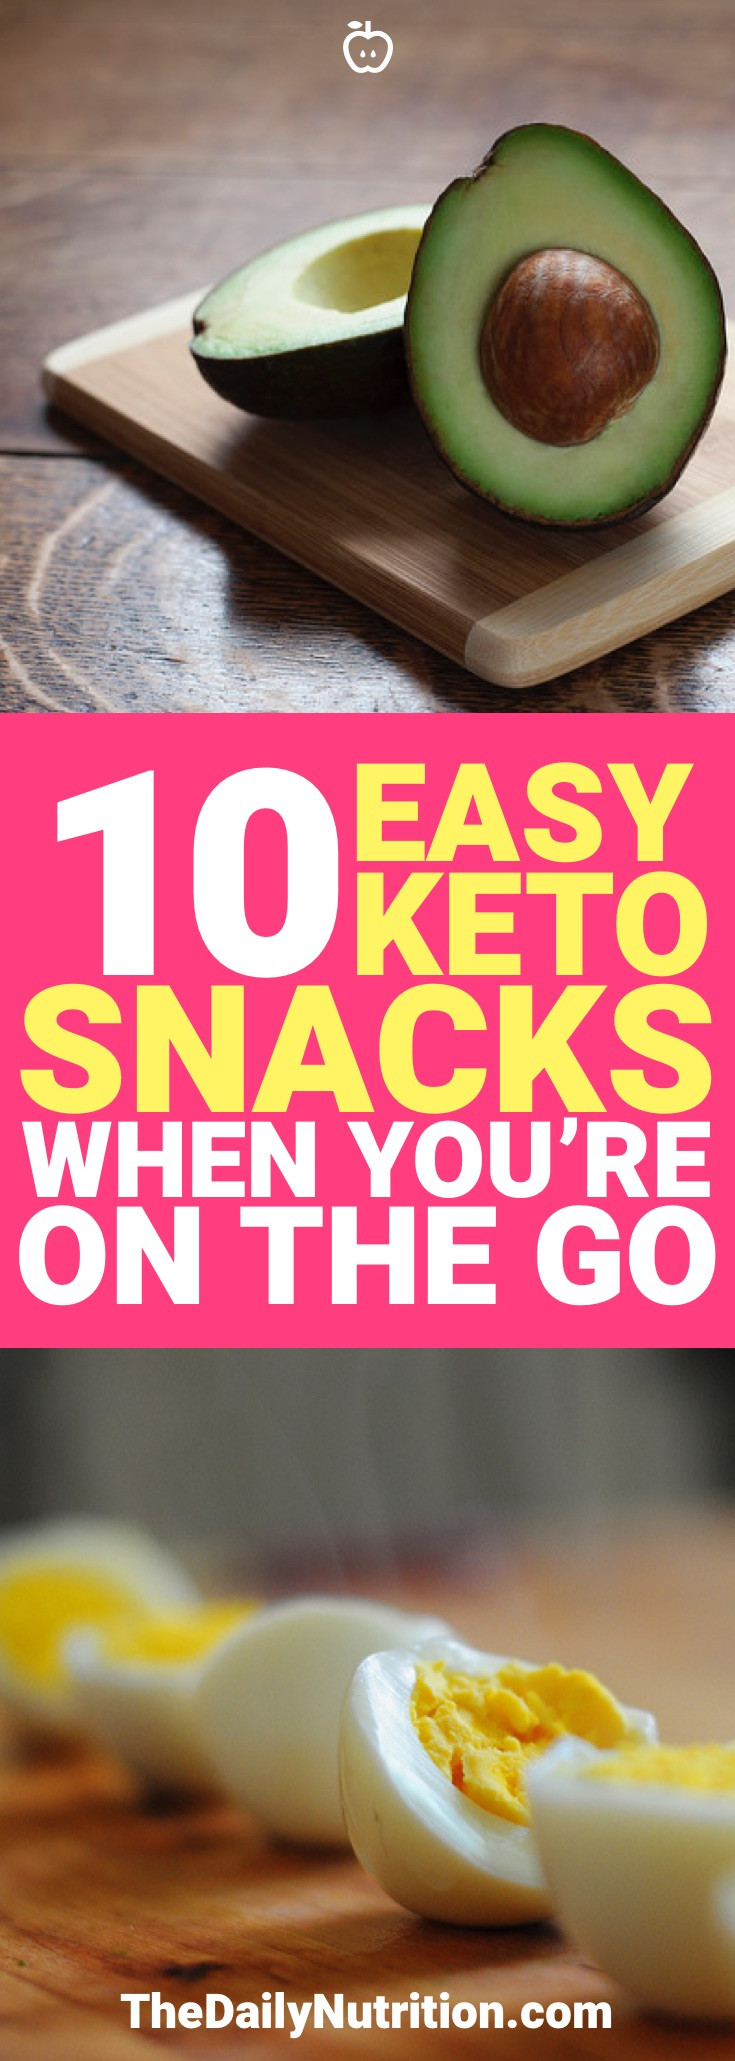 Easy Keto Snacks On The Go
 10 Simple Keto Snacks When You re the Go